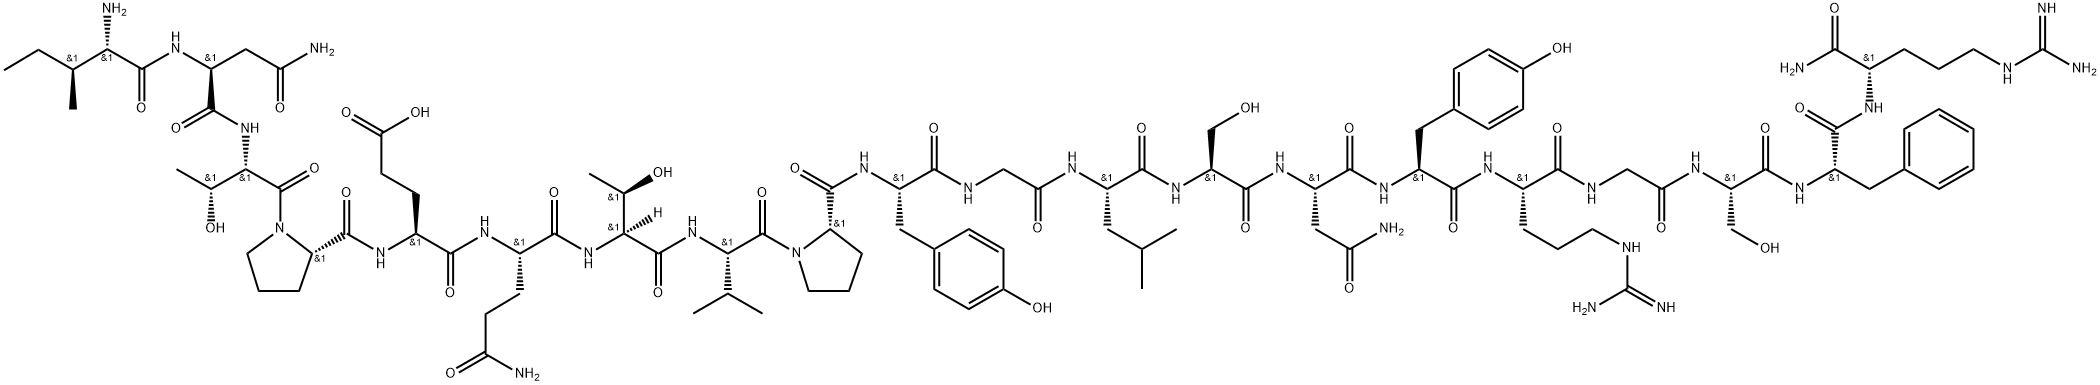 Big Endothelin-3 (22-41) amide (human) trifluoroacetate salt H-Ile-Asn-Thr-Pro-Glu-Gln-Thr-Val-Pro-Tyr-Gly-Leu-Ser-Asn-Tyr-Arg-Gly-Ser-Phe-Arg-NH2 trifluoroacetate salt Struktur